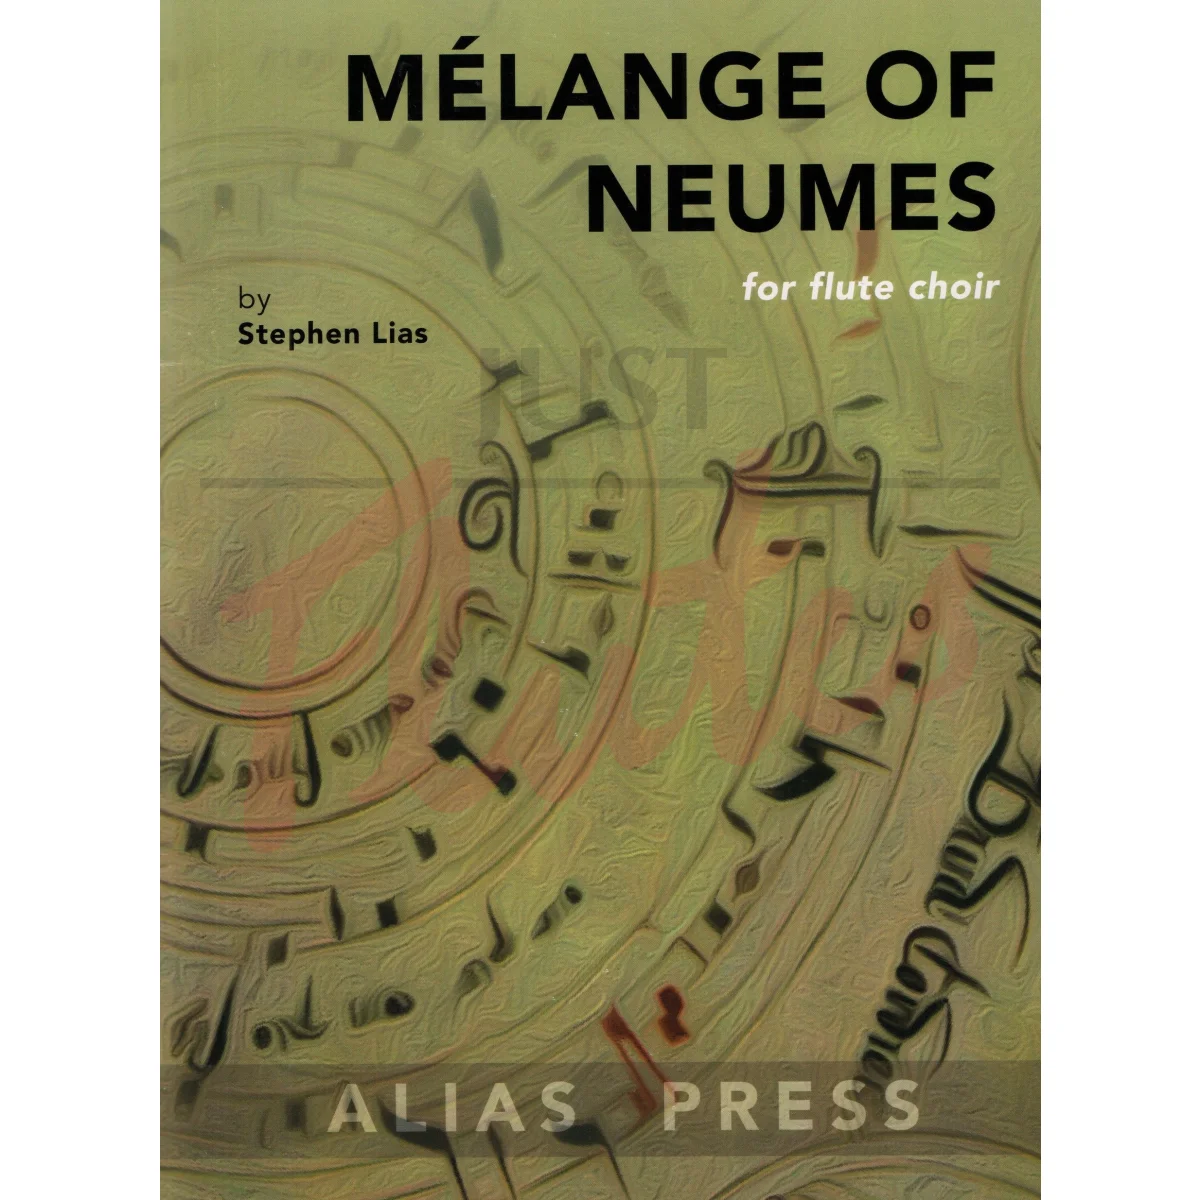 Mélange of Neumes for Flute Choir